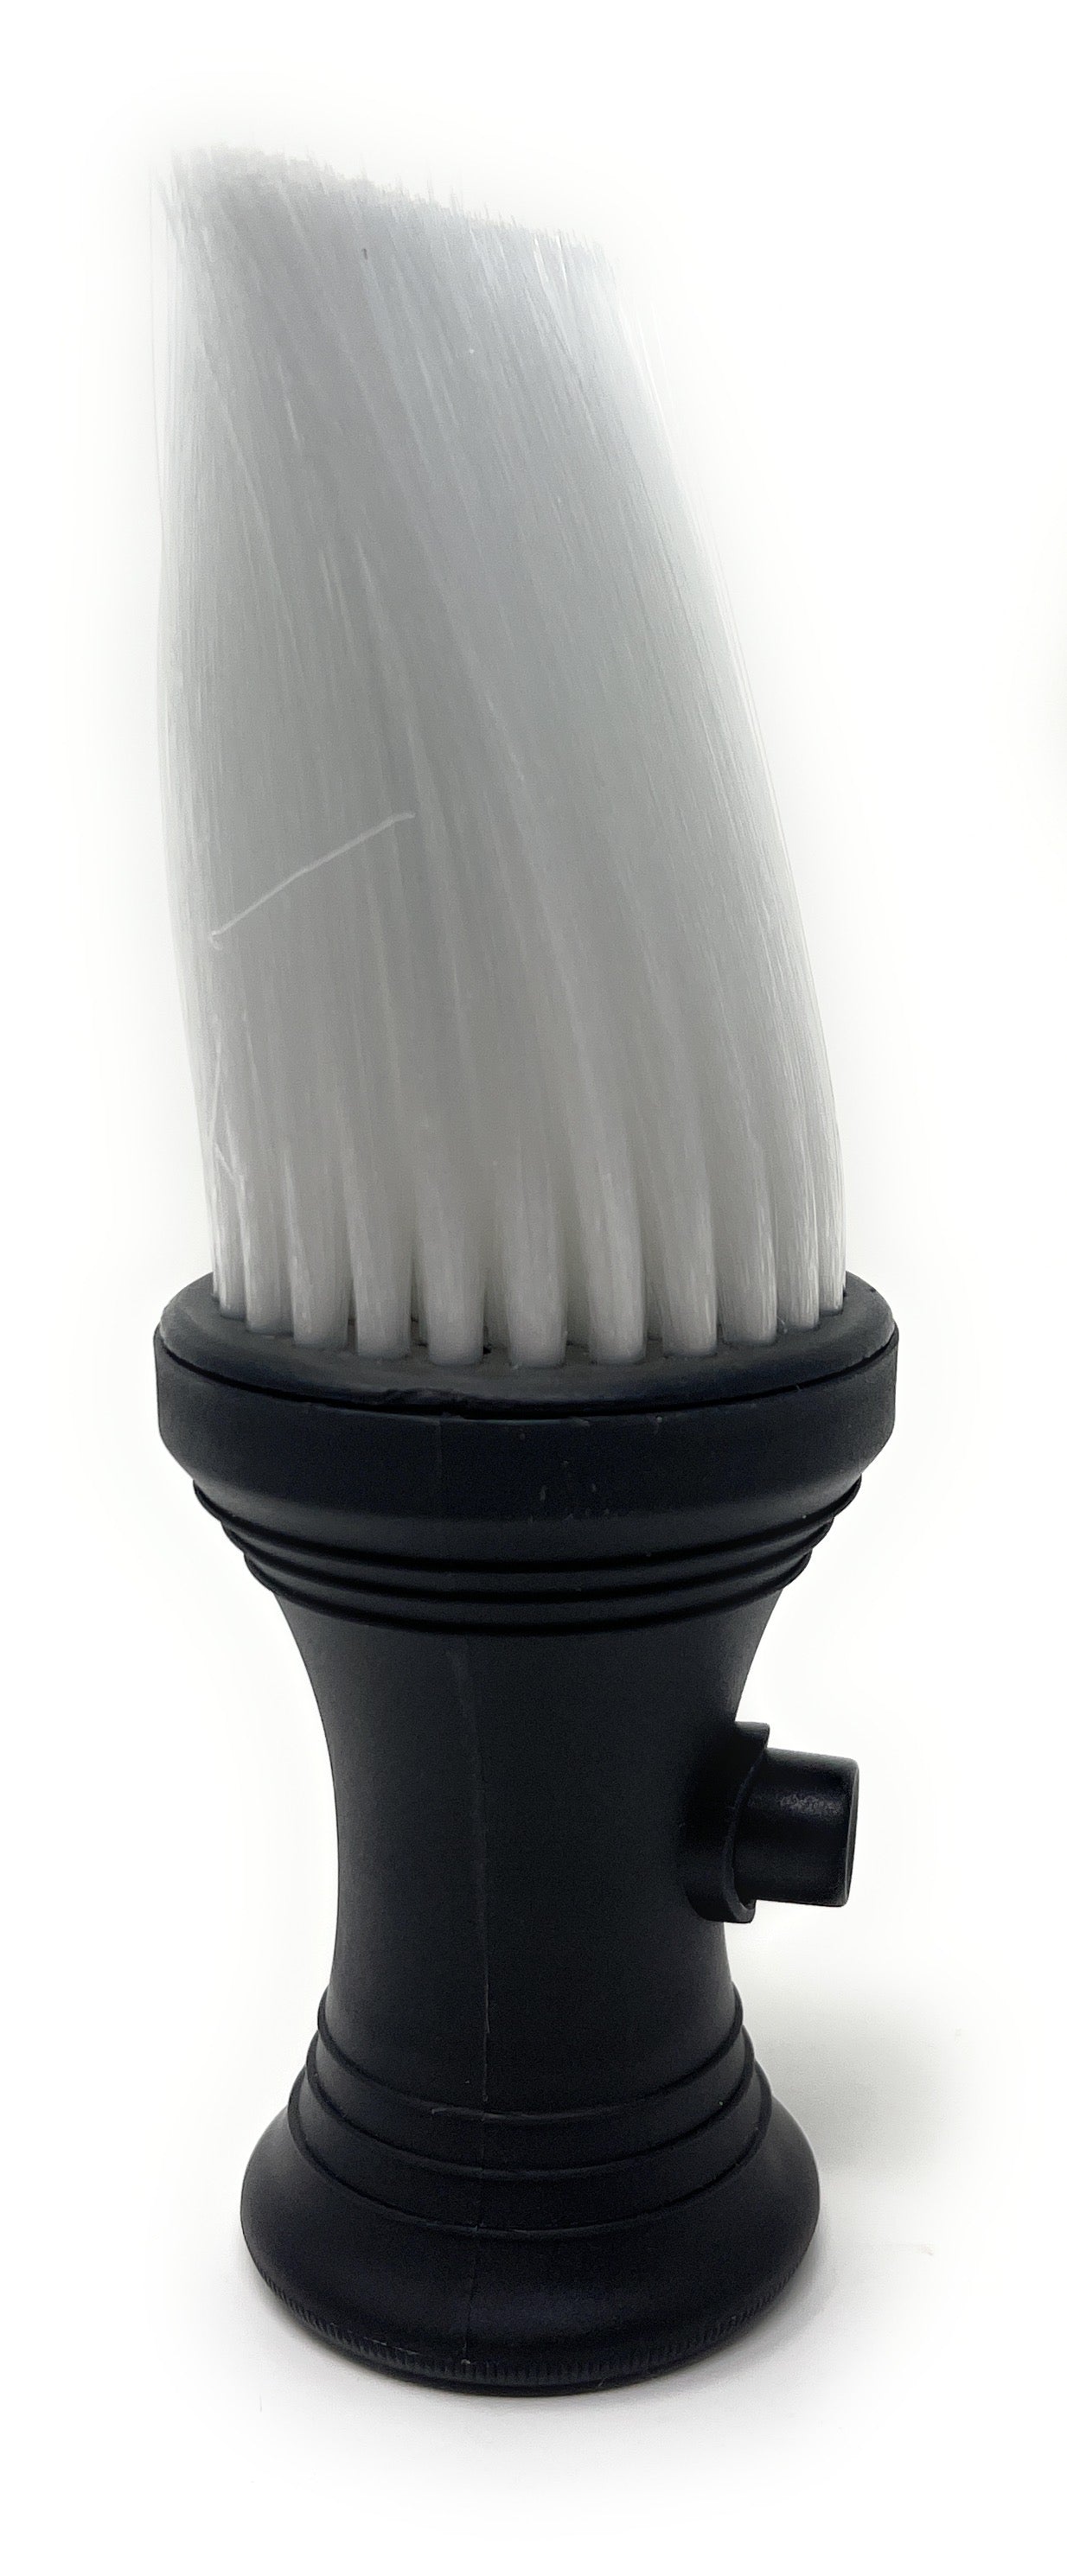 Scalpmaster Barber Brush Neck Duster With Powder Dispenser  Soft Nylon Bristles Stand Up Base 1 Pc